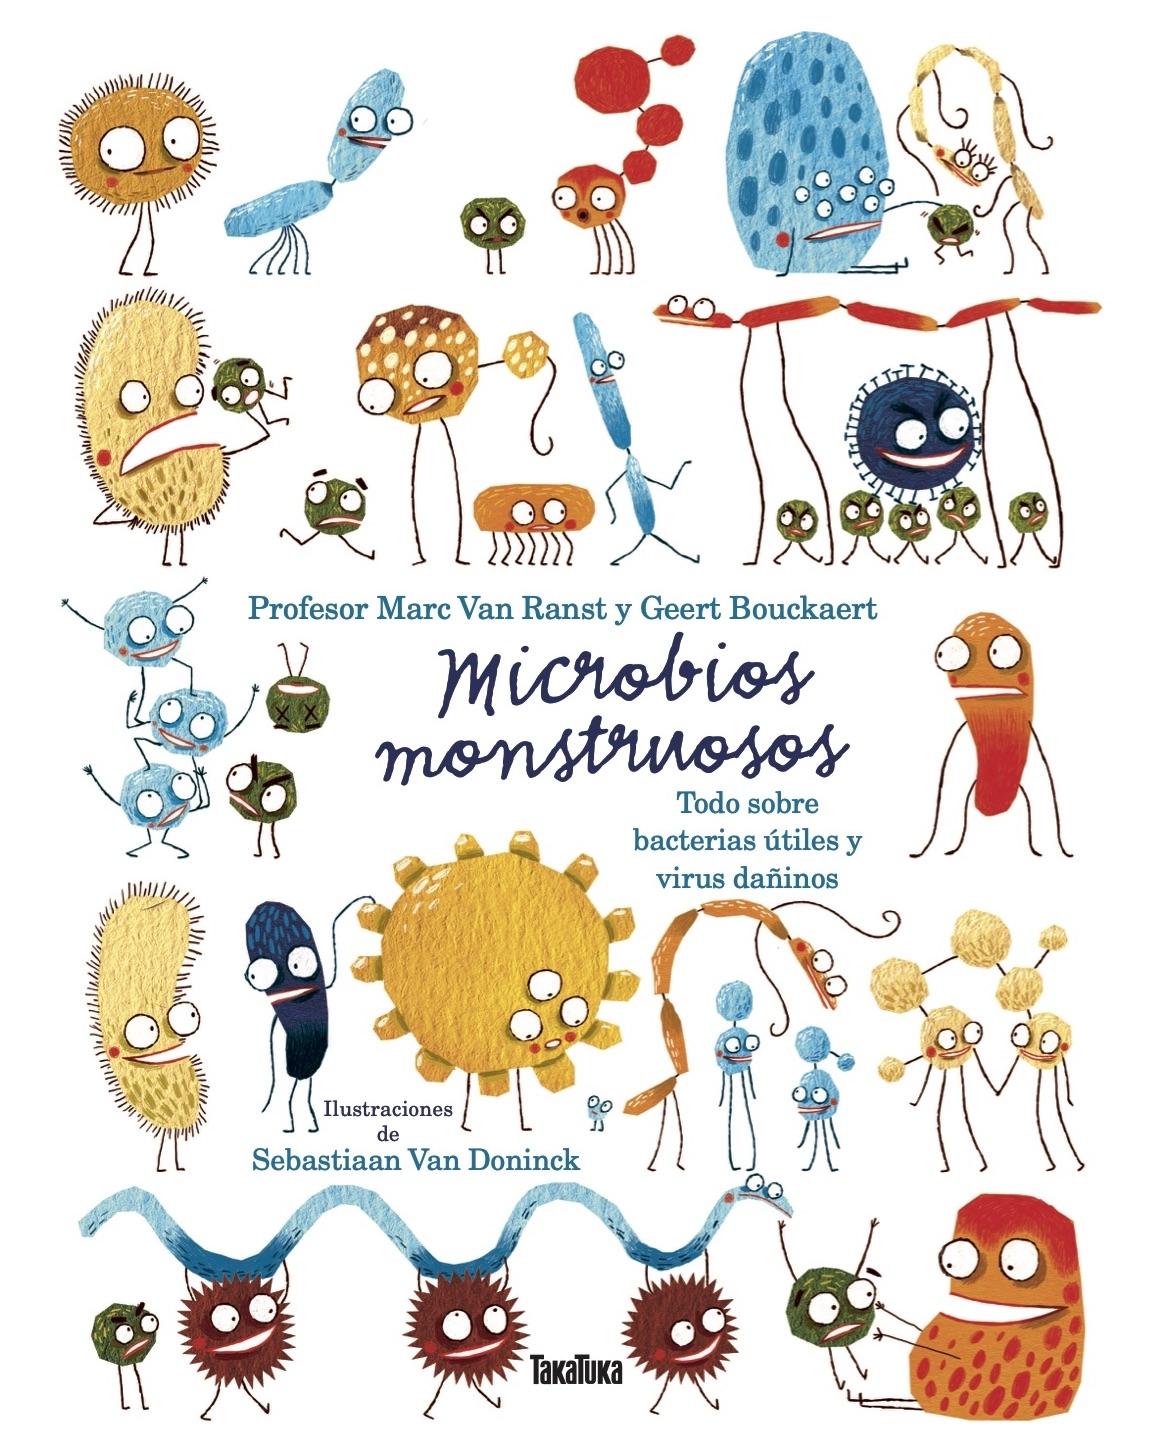 Microbios monstruosos "Todo sobre bacterias útiles y virus dañinos"